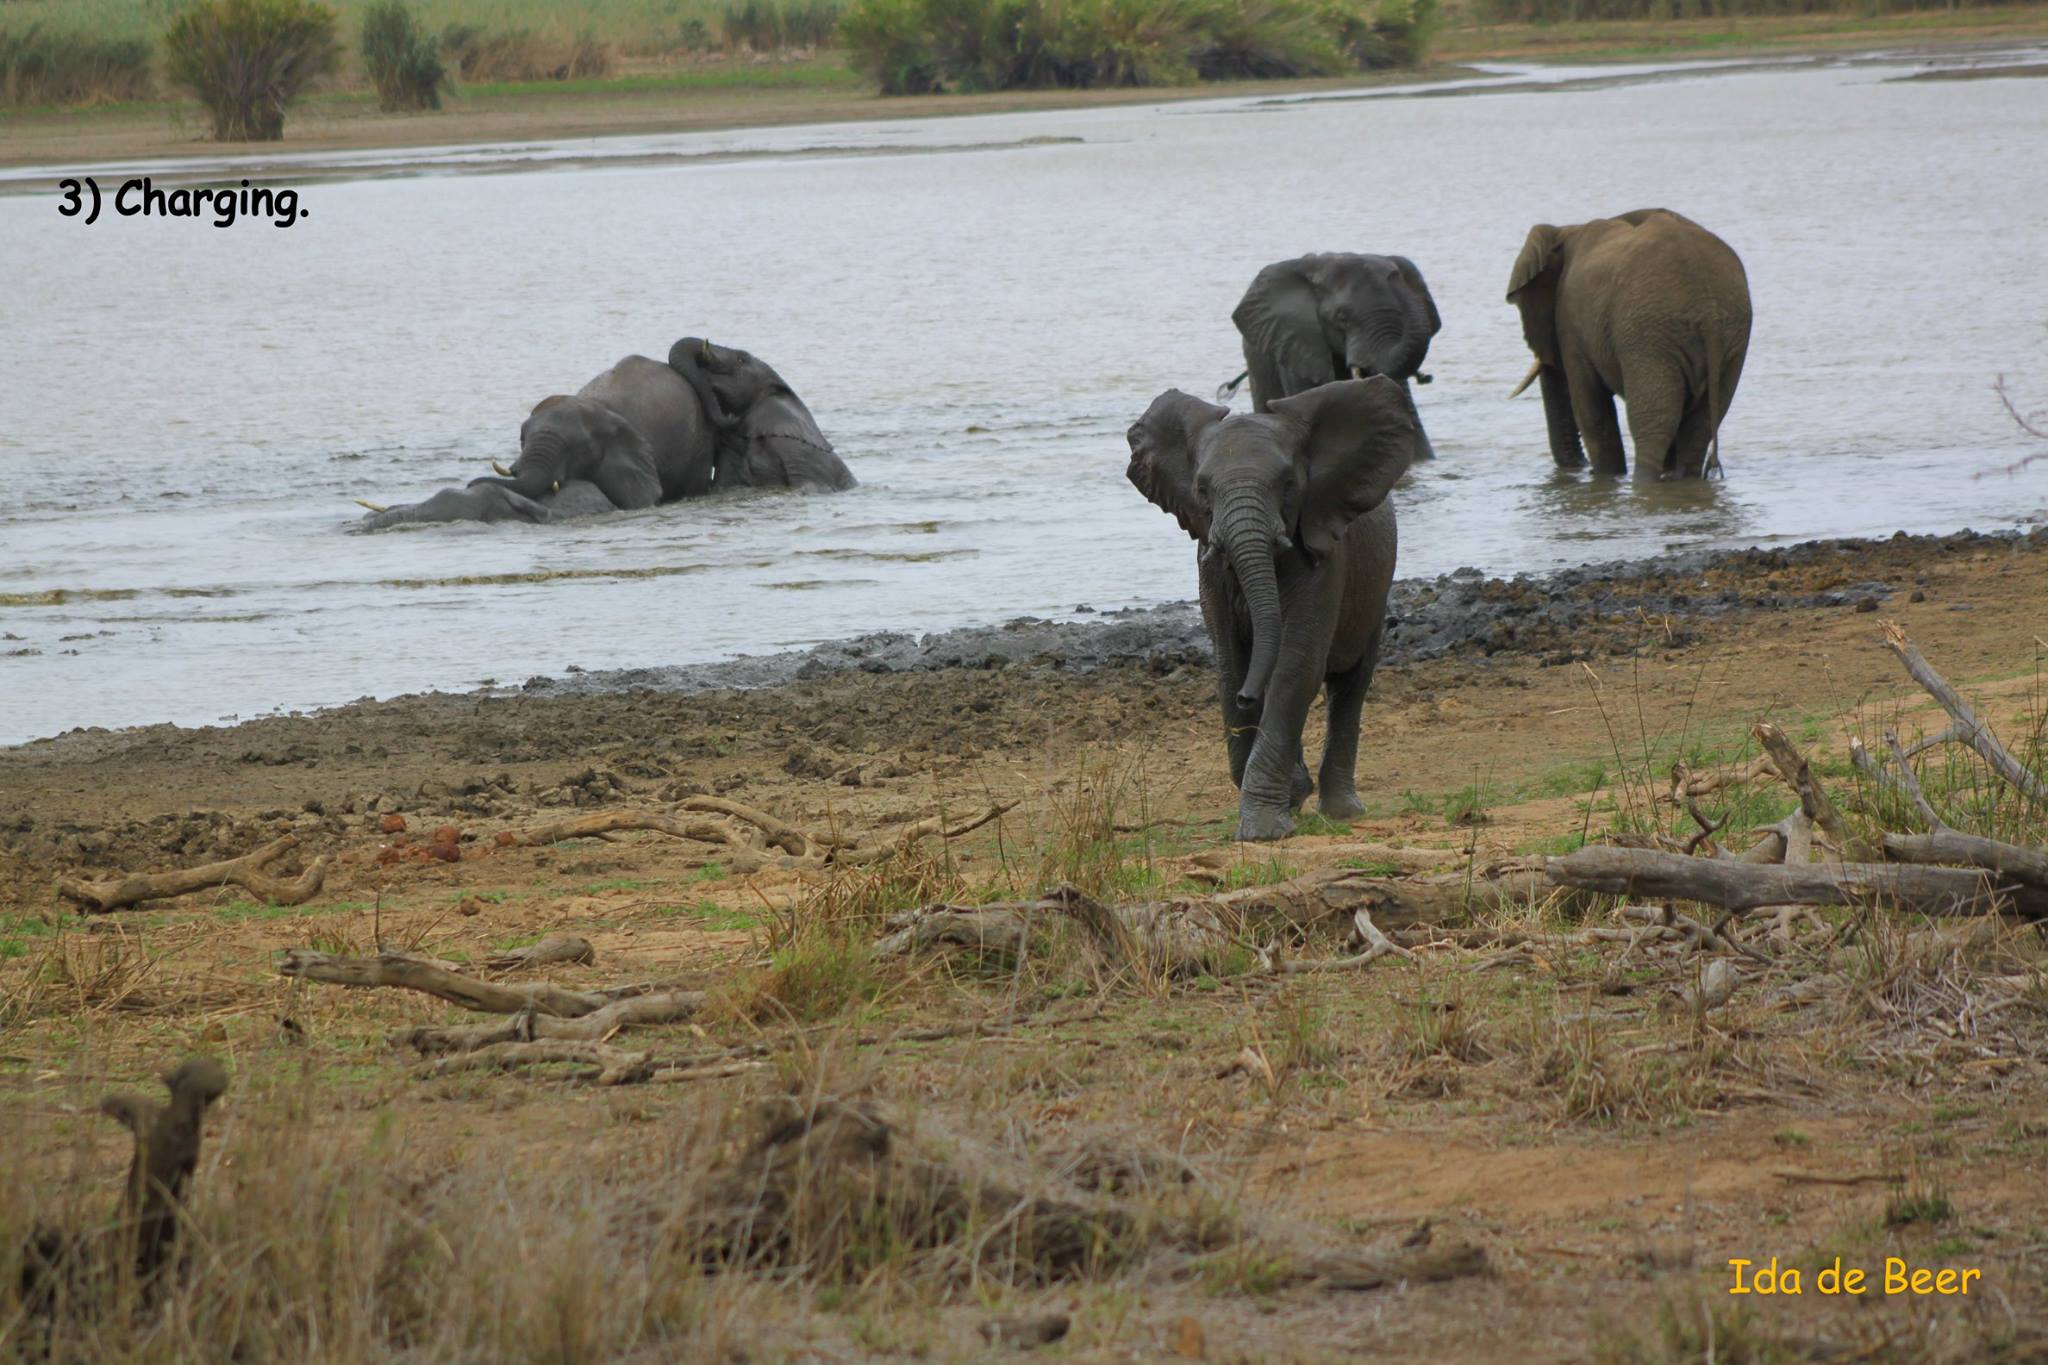 Elephant Story South Africa